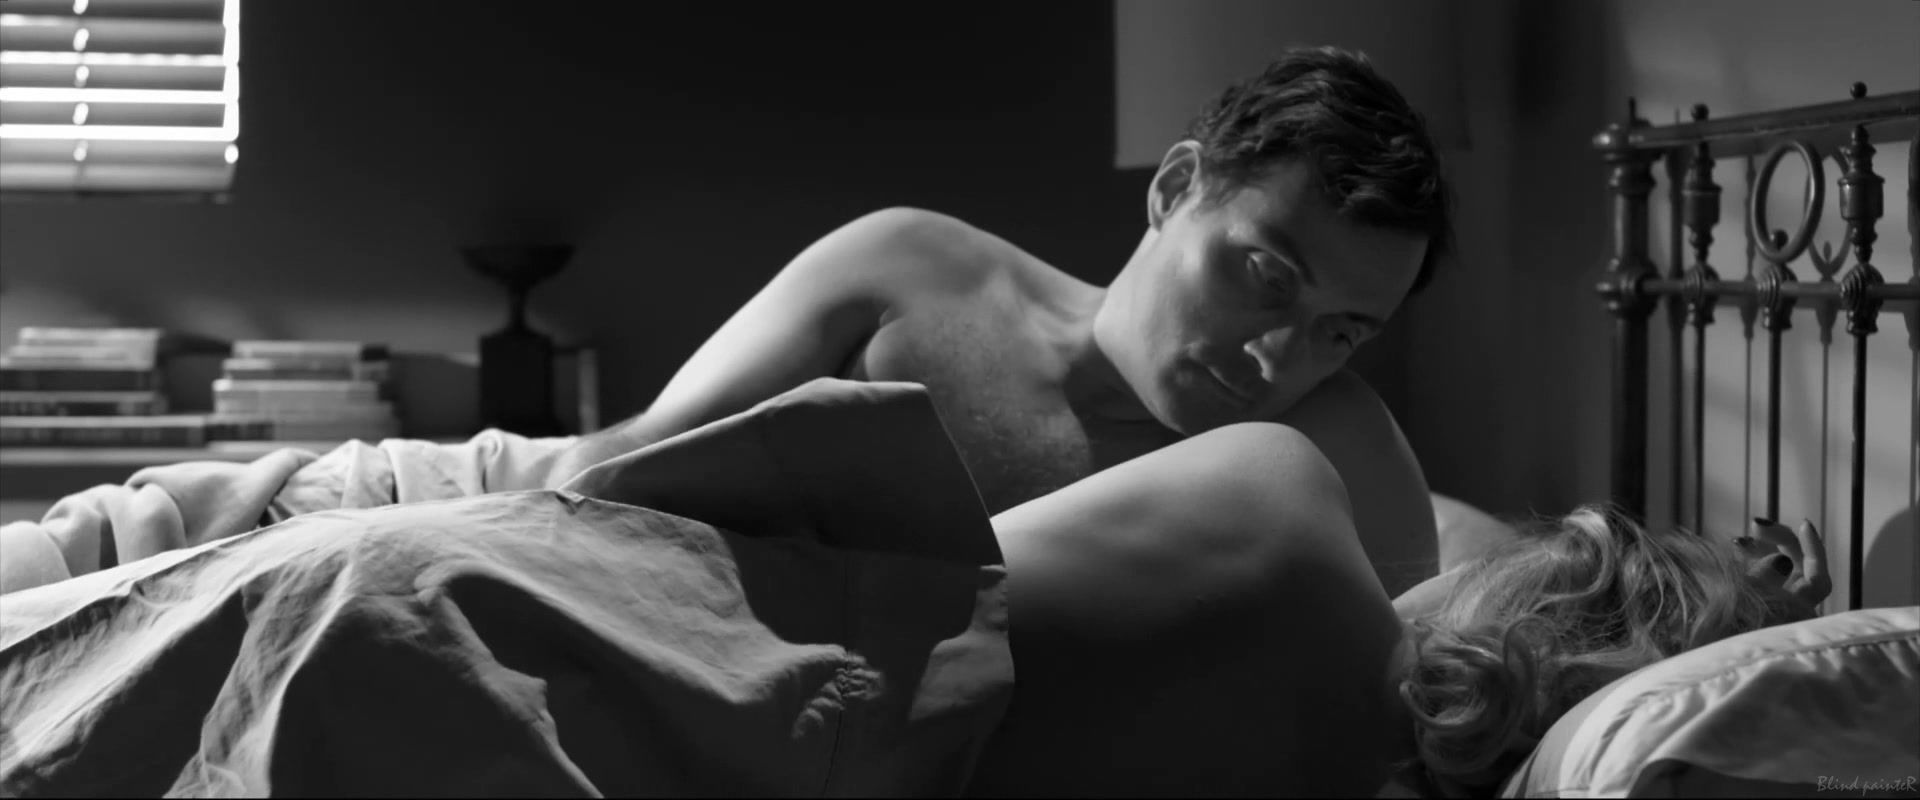 Big Boobs Sex video Malin Akerman nude - Hotel Noir (2012) Porness